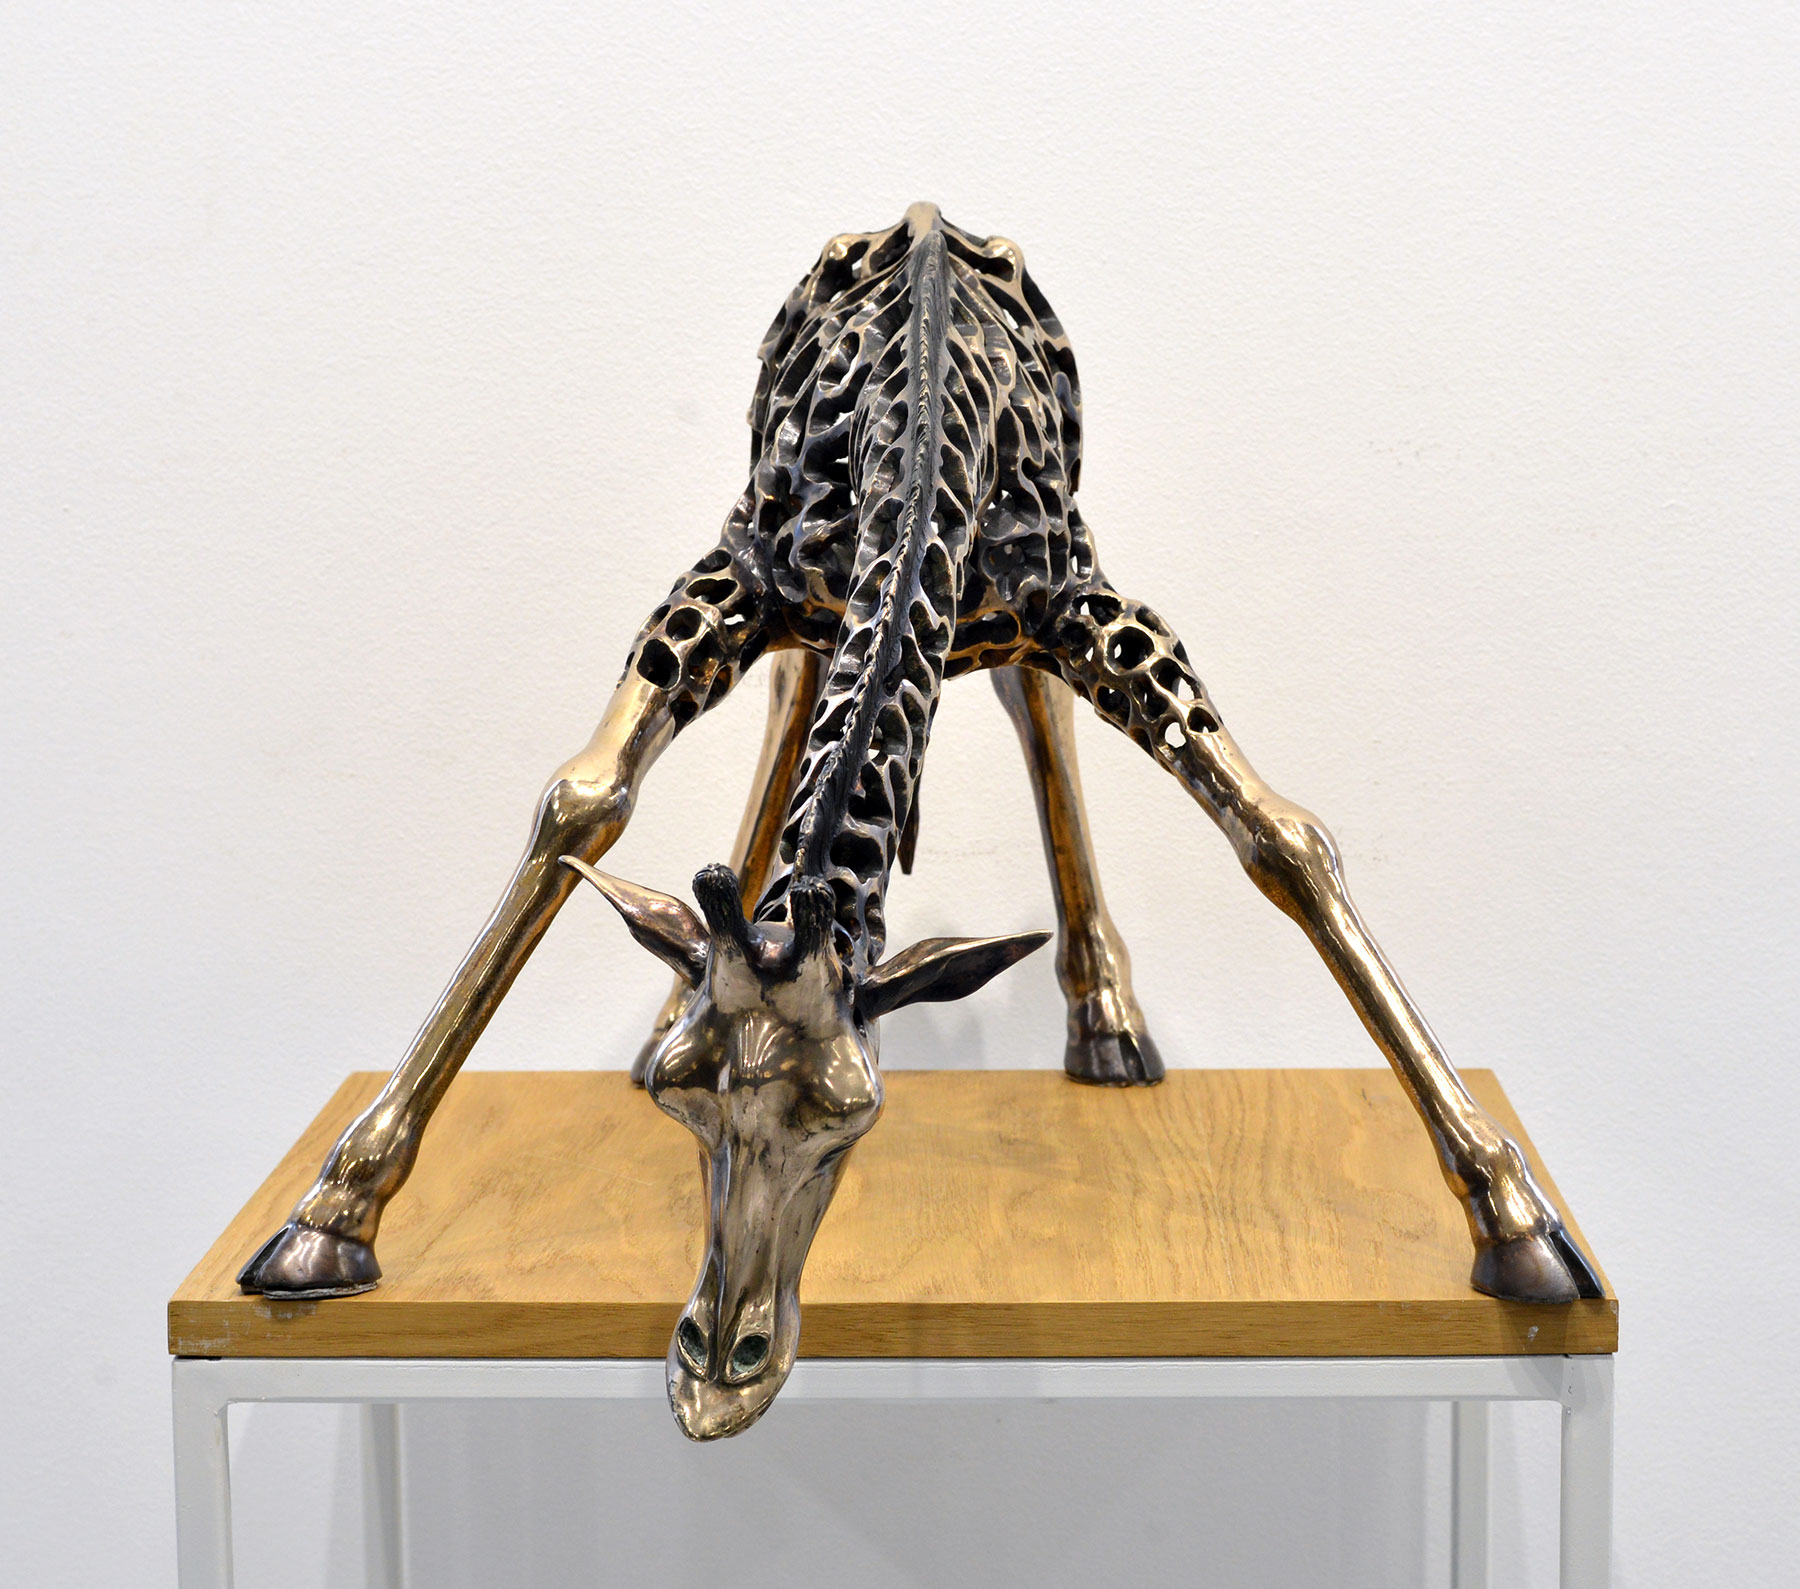 "Giraffe", 2000 - 2